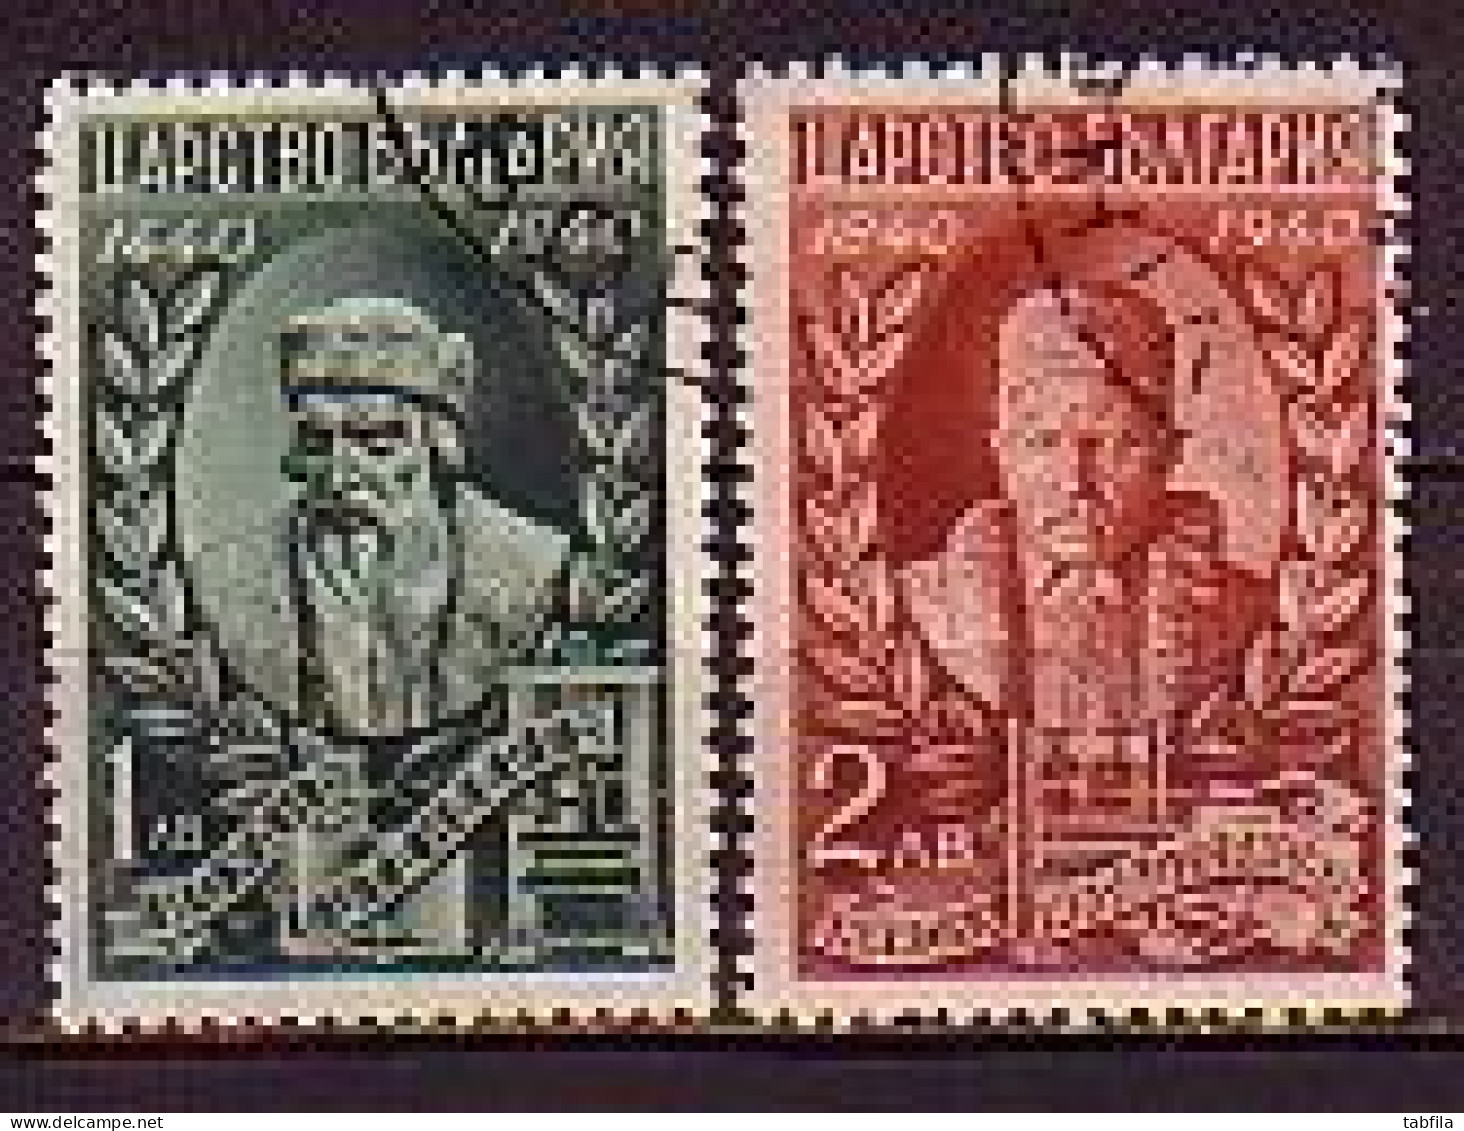 BULGARIA - 1940 - 5e Cent. De L'inventition Des Caracteres D'imprimerie - Gutenberg Et Karastojanov - Mi 424/25 - Used - Usados